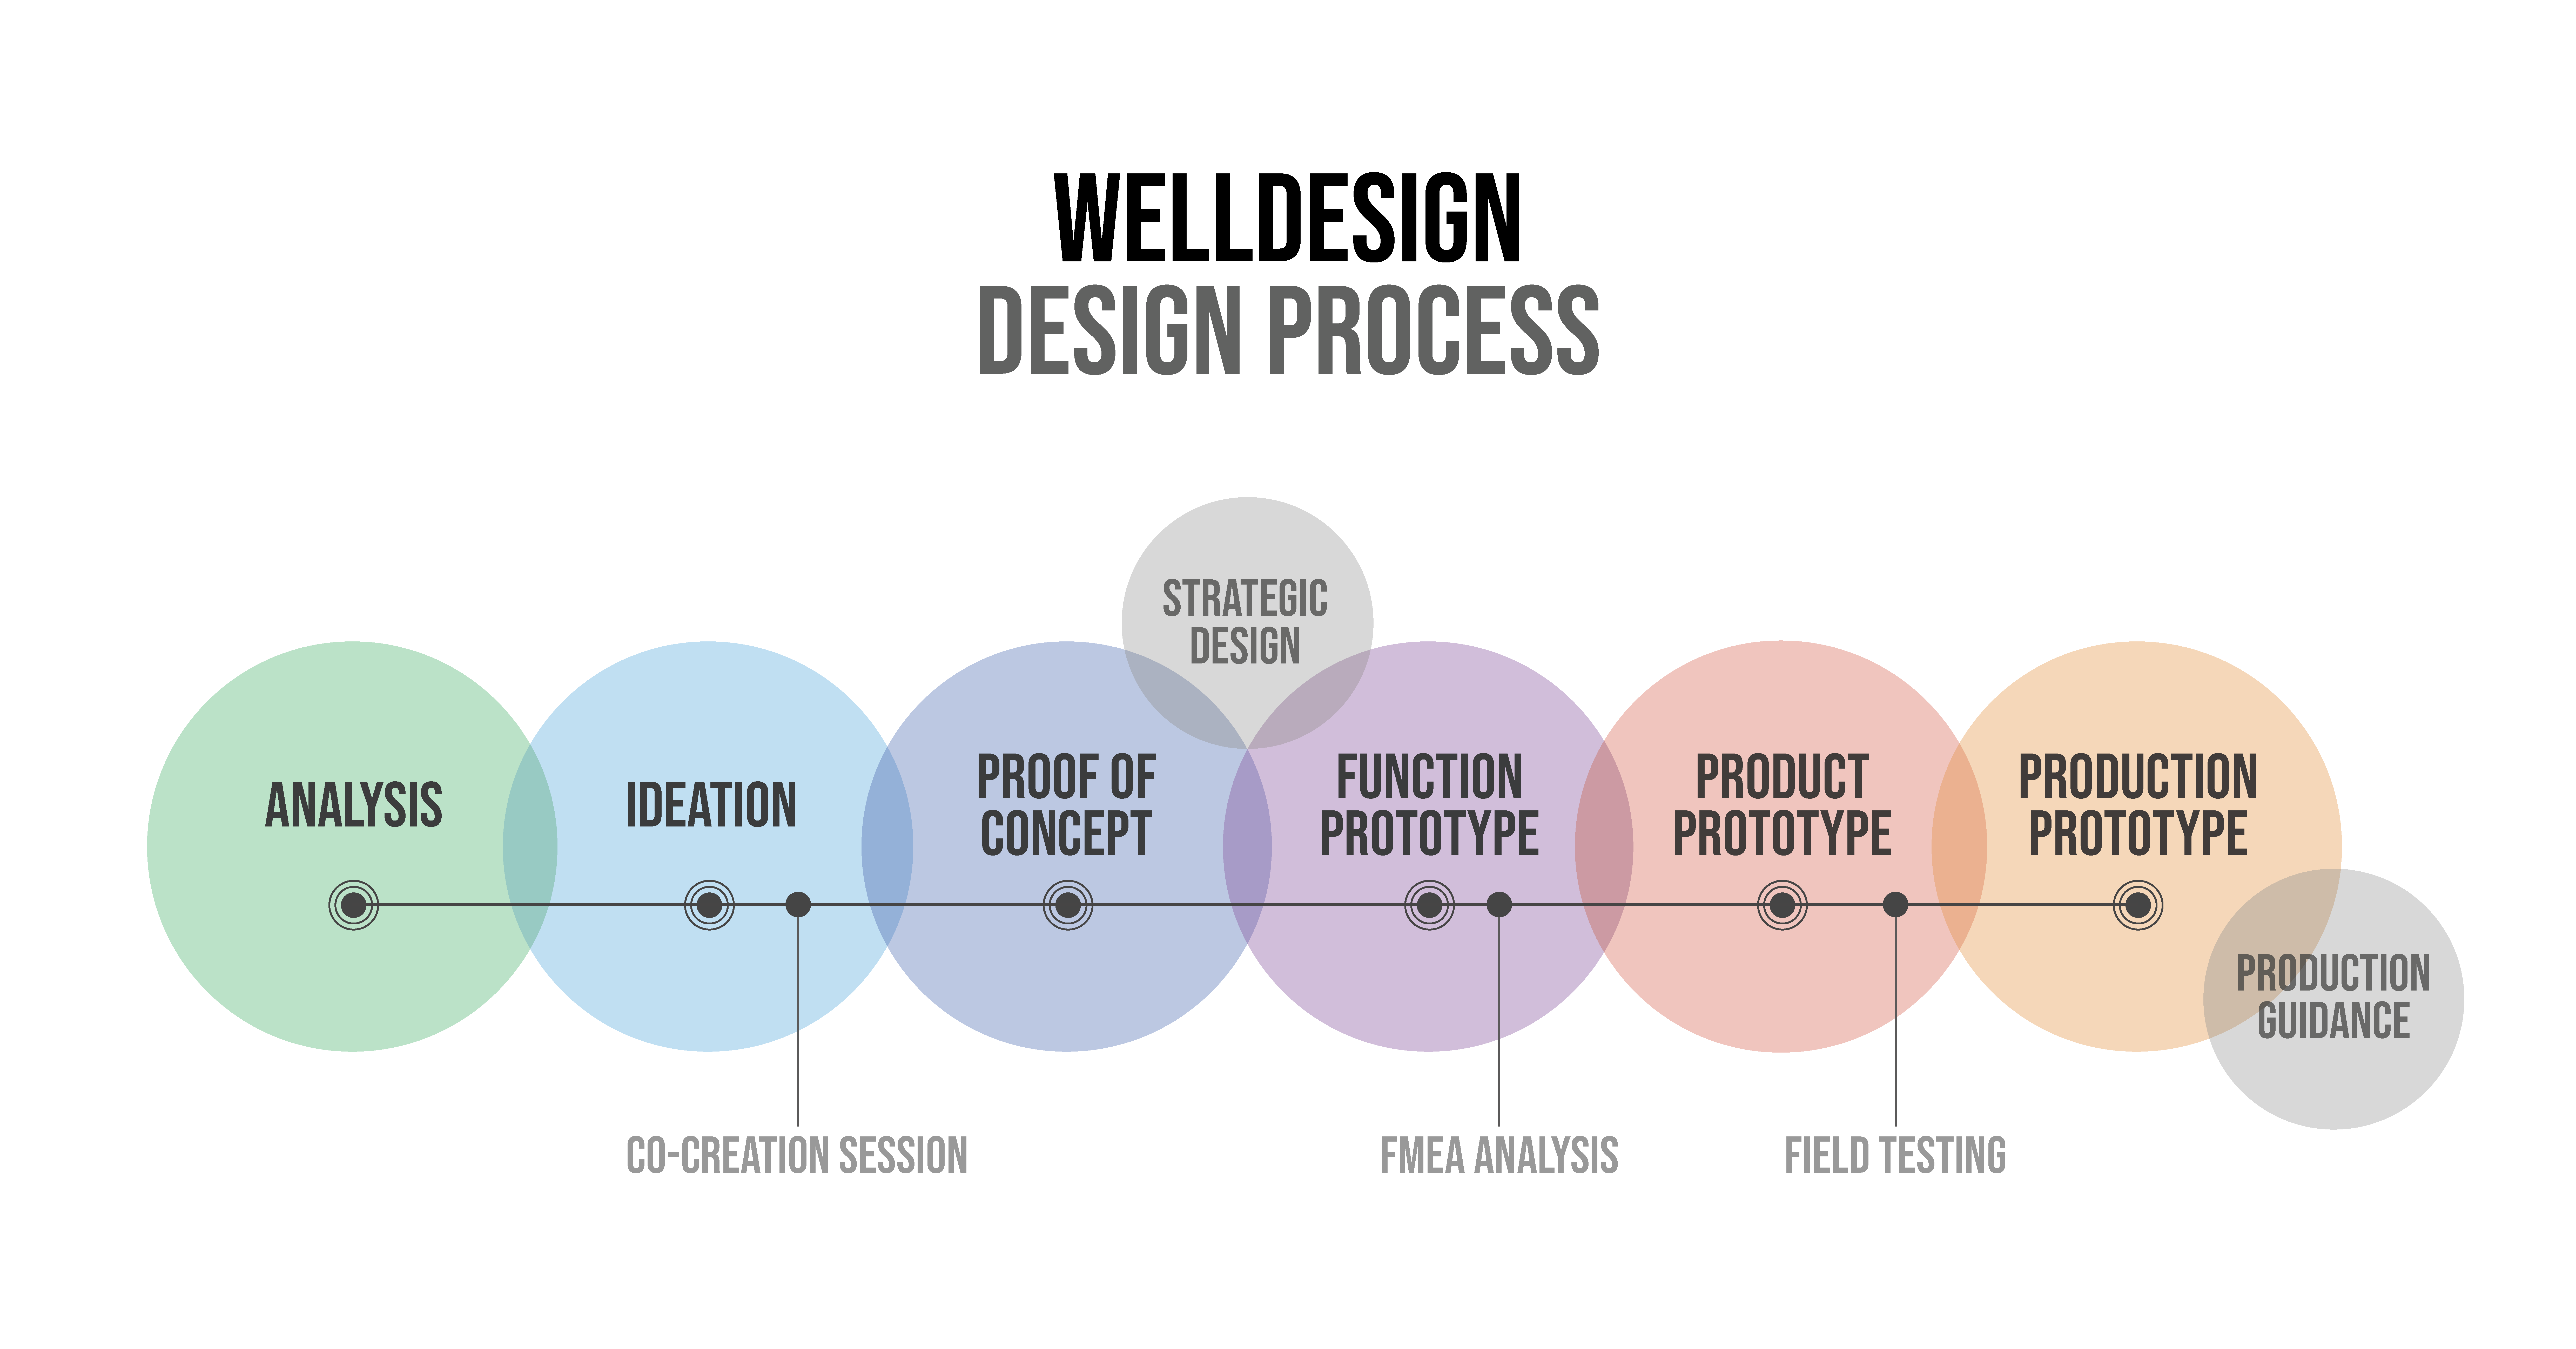 Design process infographic